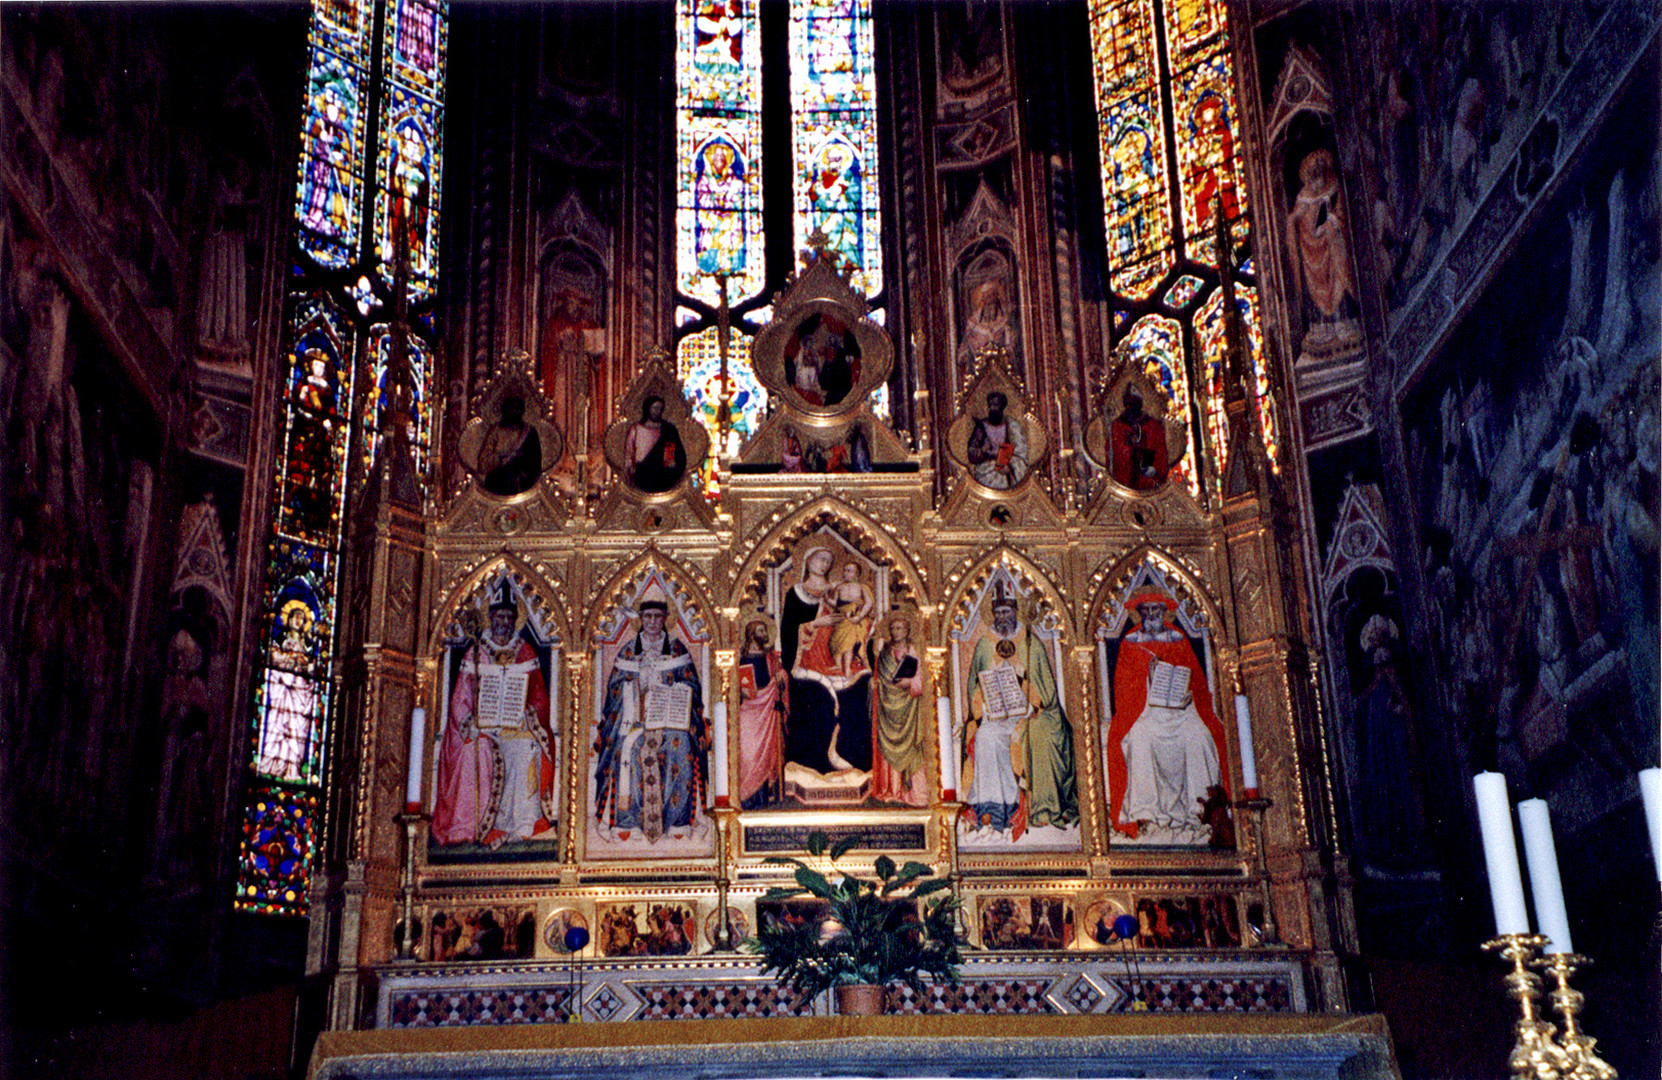 Basilica of Santa Croce Altar, Giovanni del Biondo's Virgin and Saints